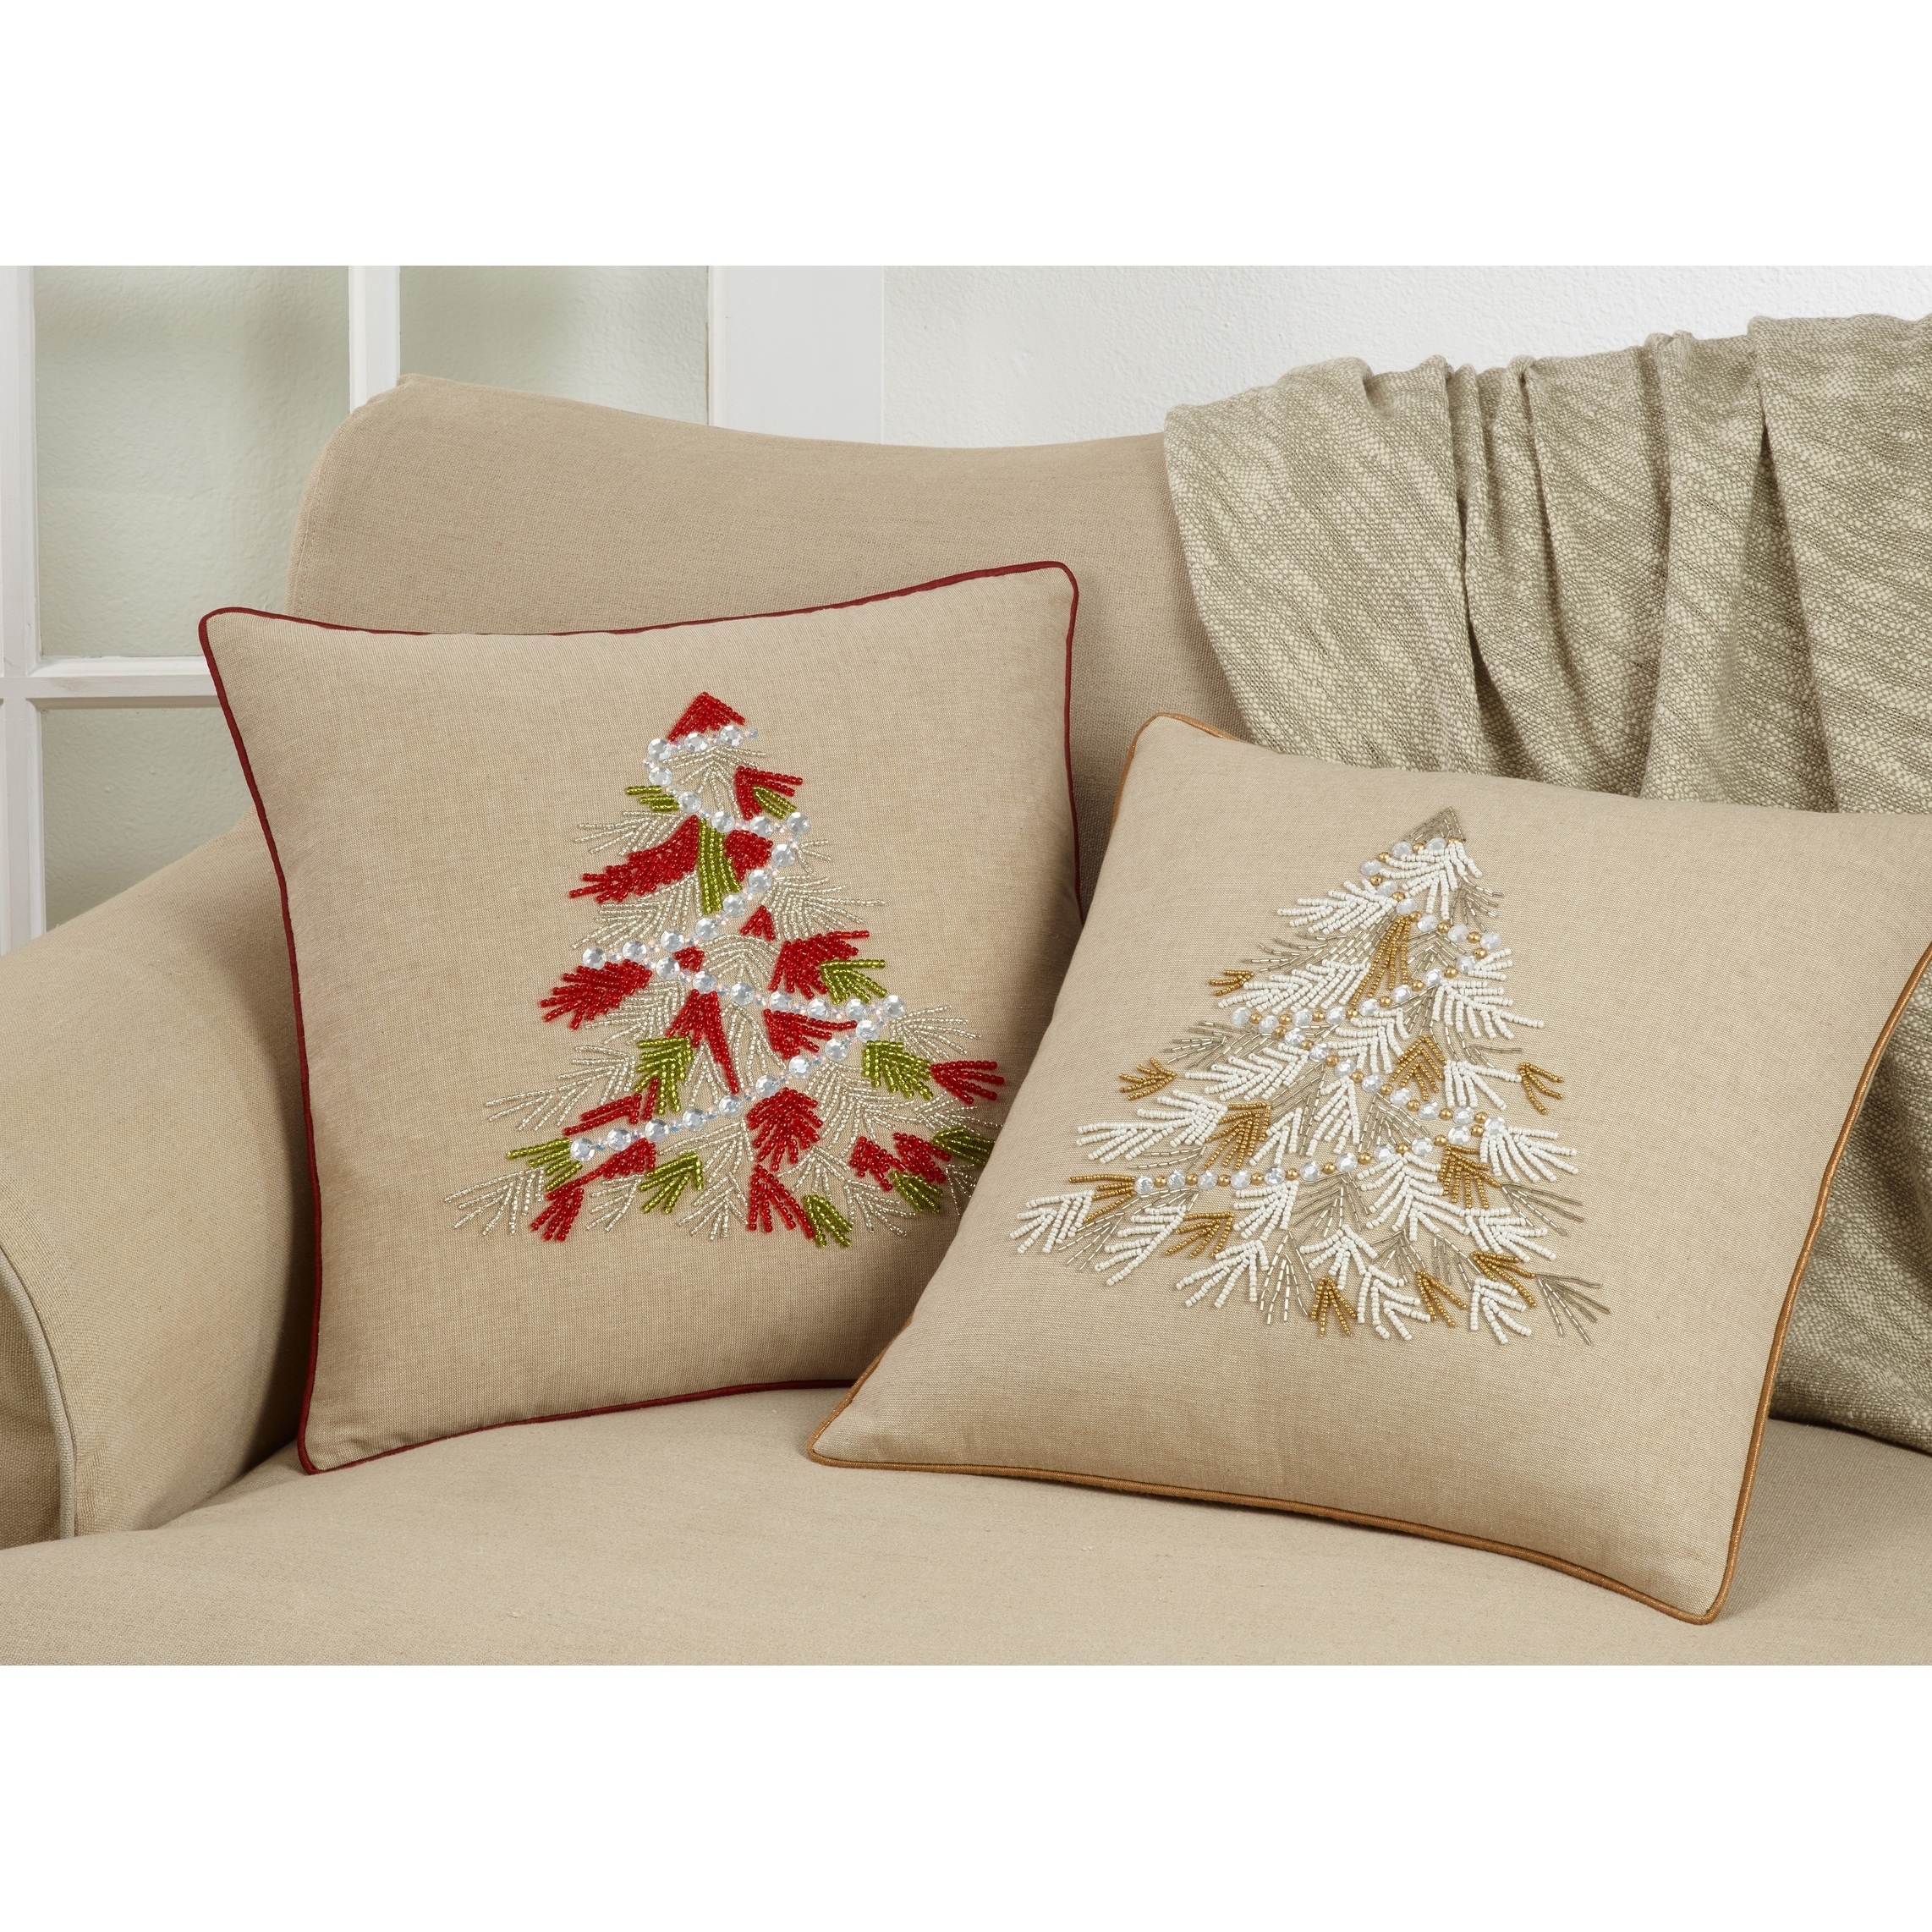 https://ak1.ostkcdn.com/images/products/29760965/Throw-Pillow-With-Beaded-Christmas-Tree-Design-247ffe2c-3870-461e-b5e8-c10d765a2d8a.jpg